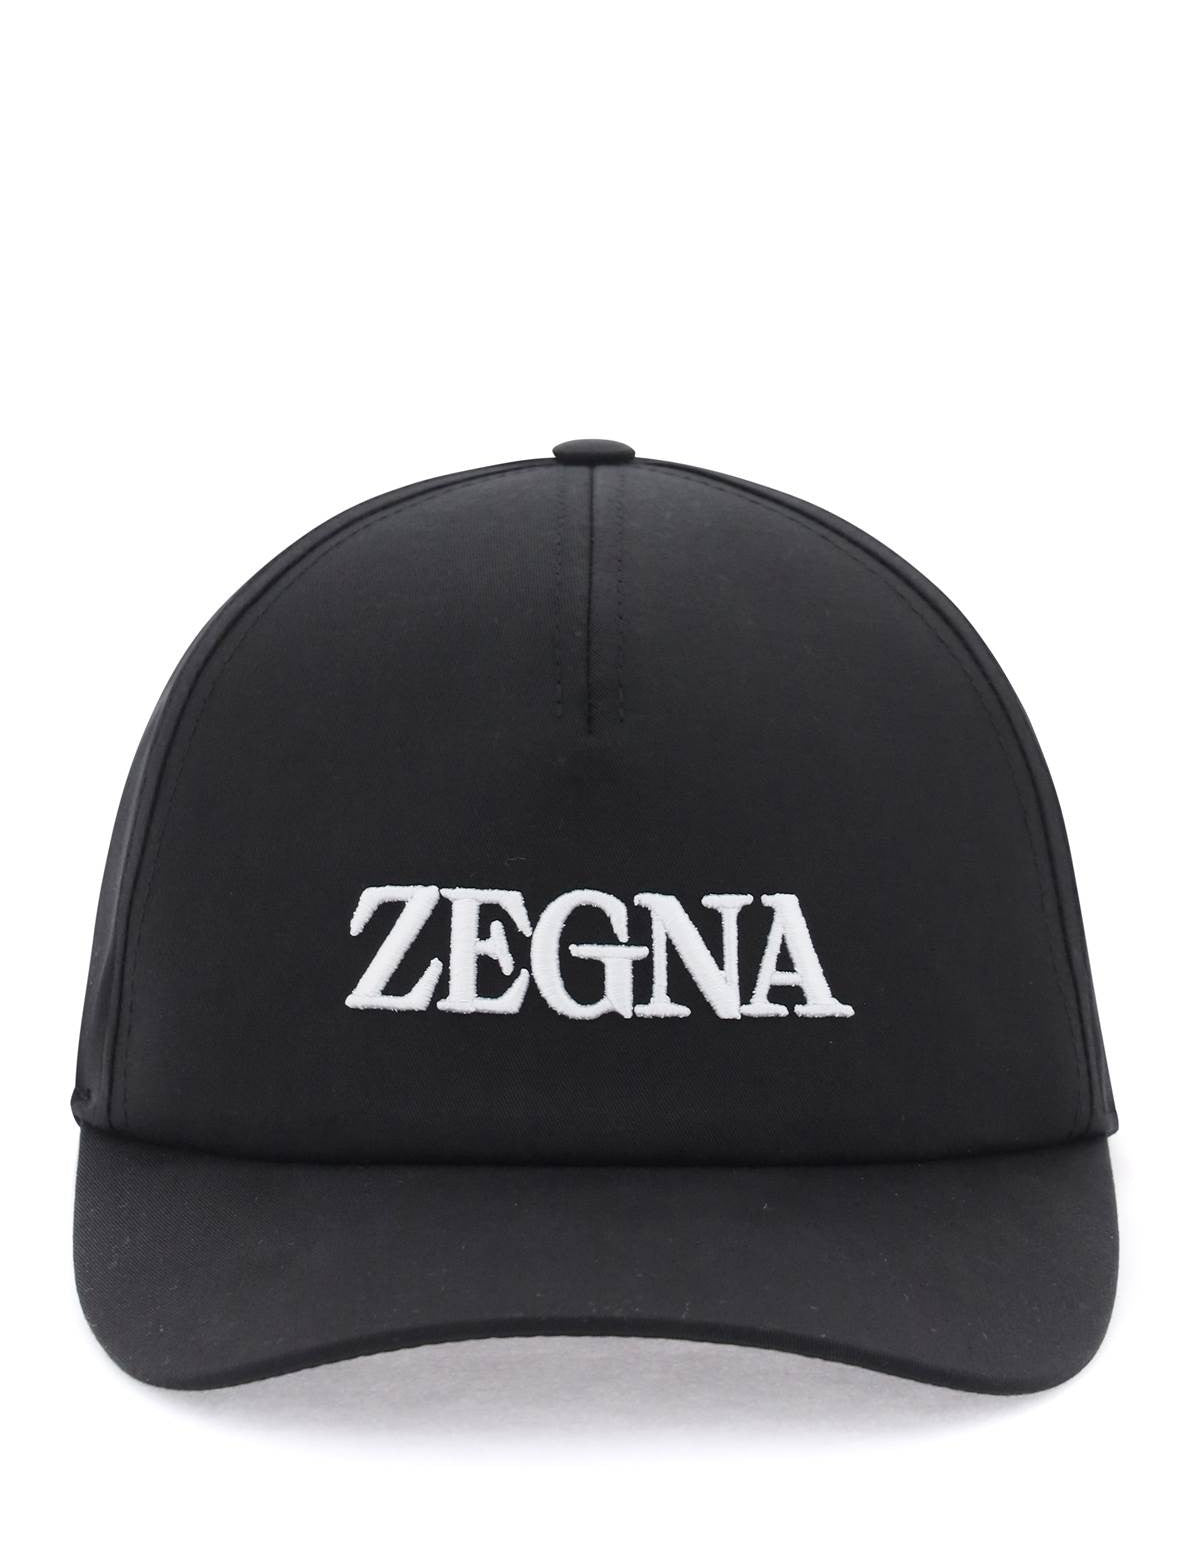 zegna-baseball-cap-with-logo-embroidery.jpg